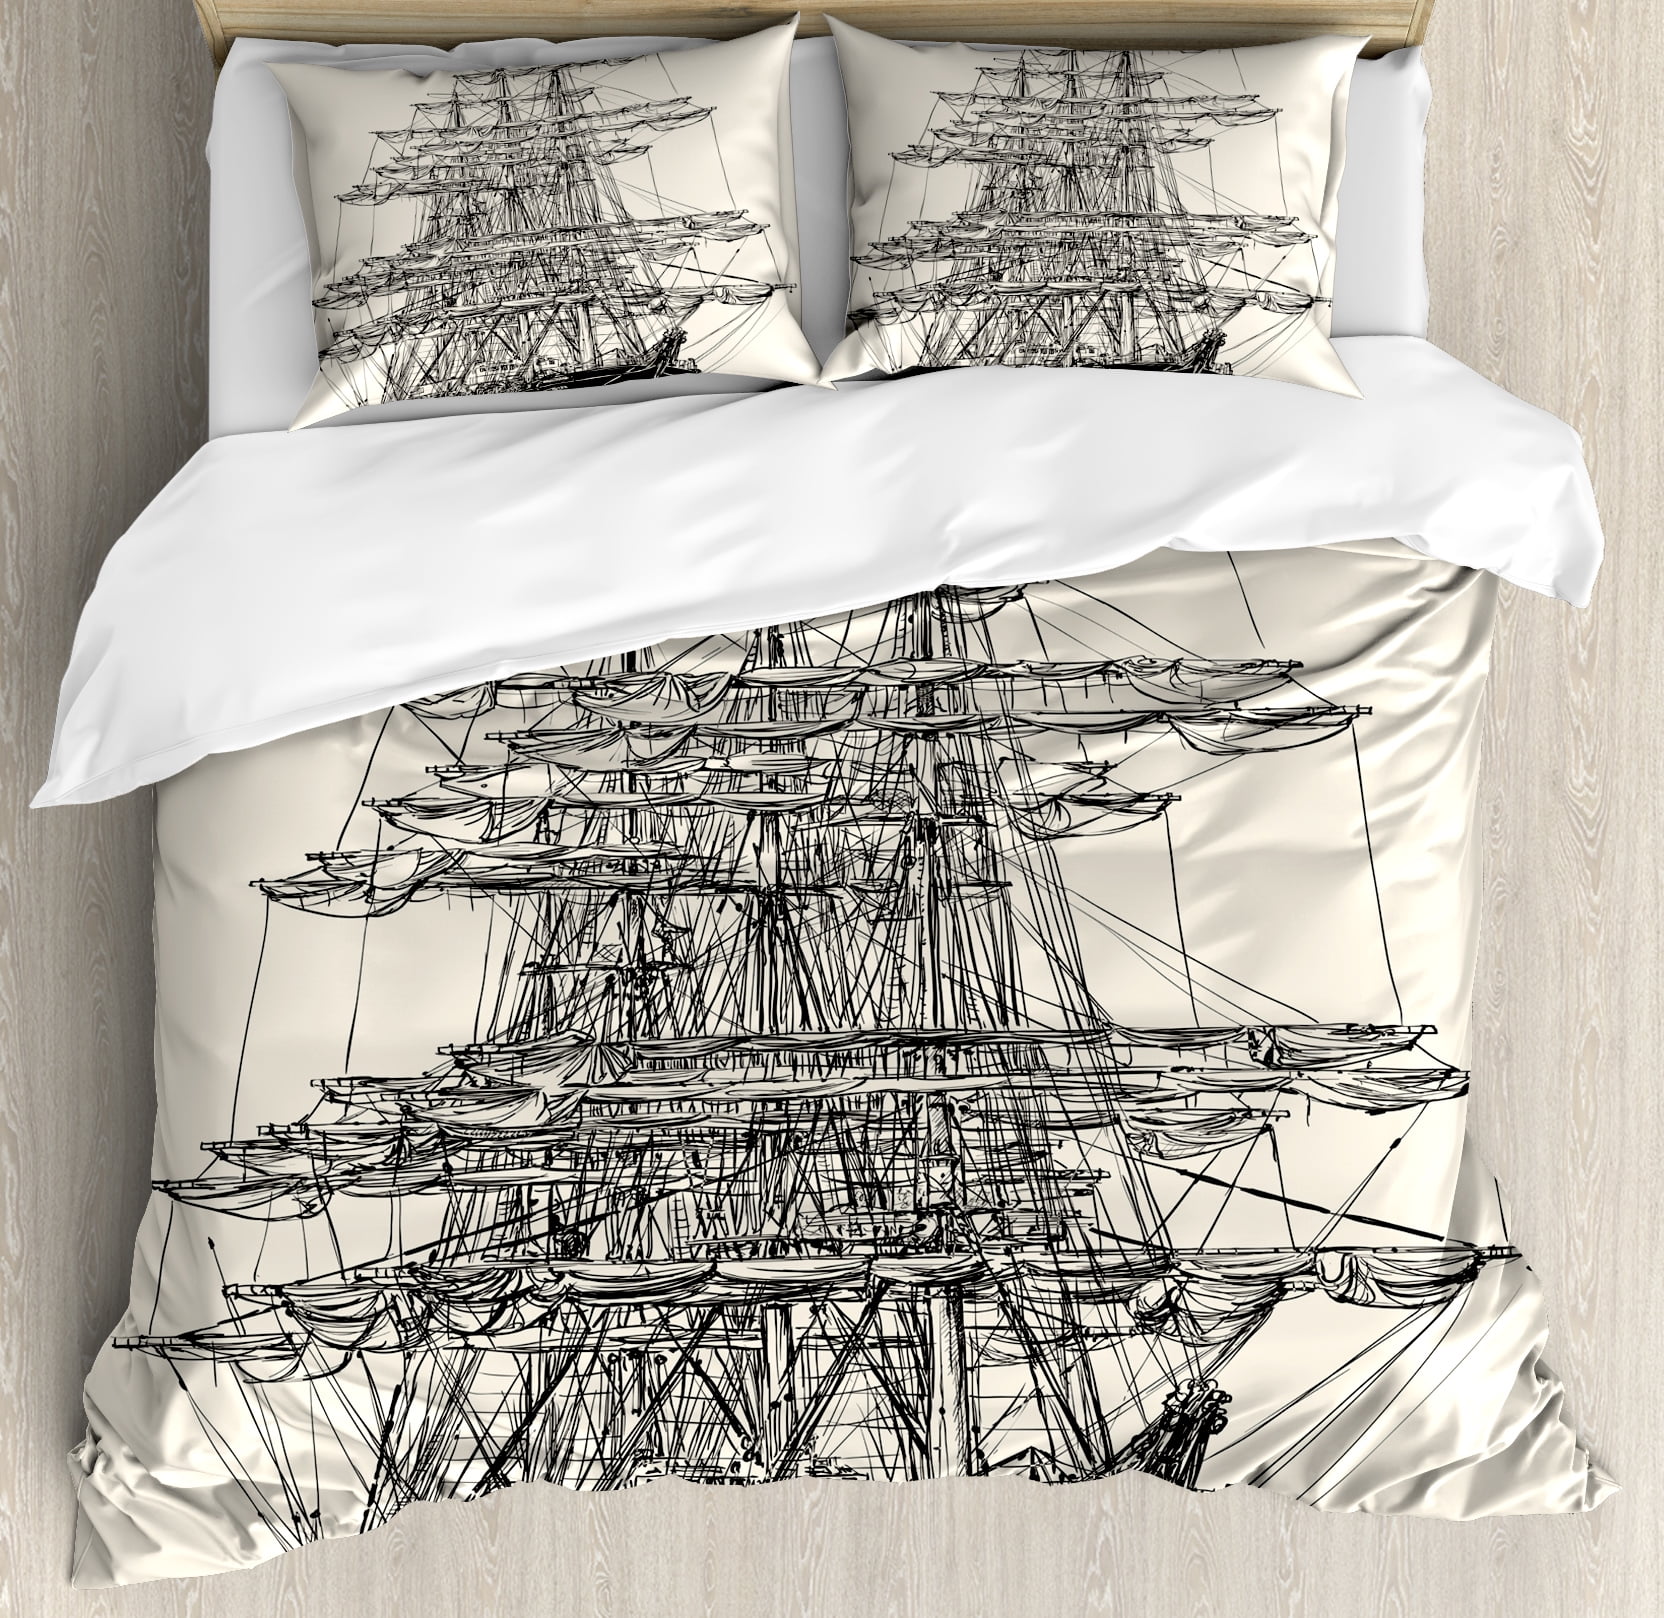 Pirate Ship King Size Duvet Cover Set Sailing Boat Detailed